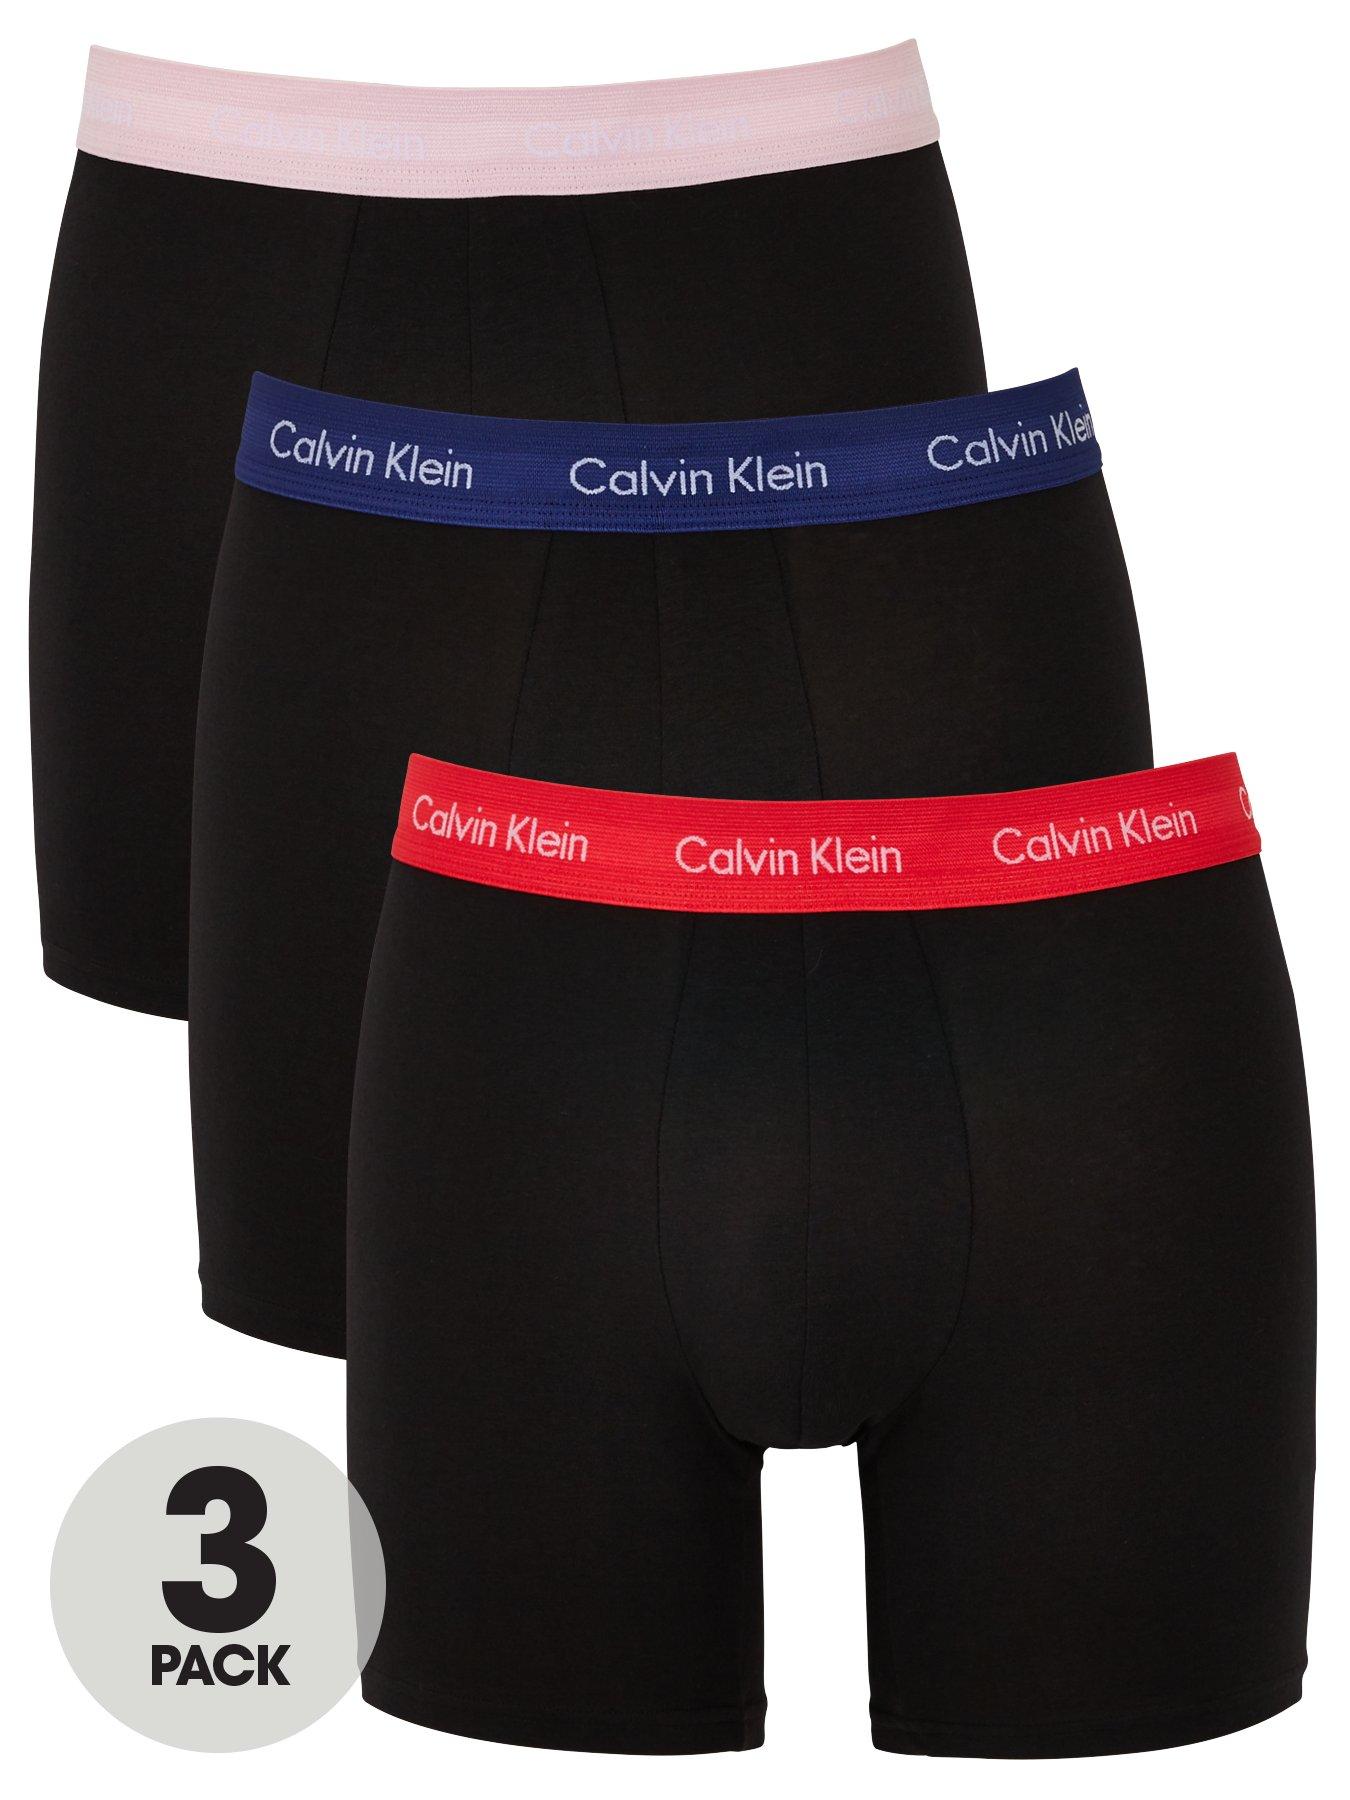 personalised calvin klein boxers